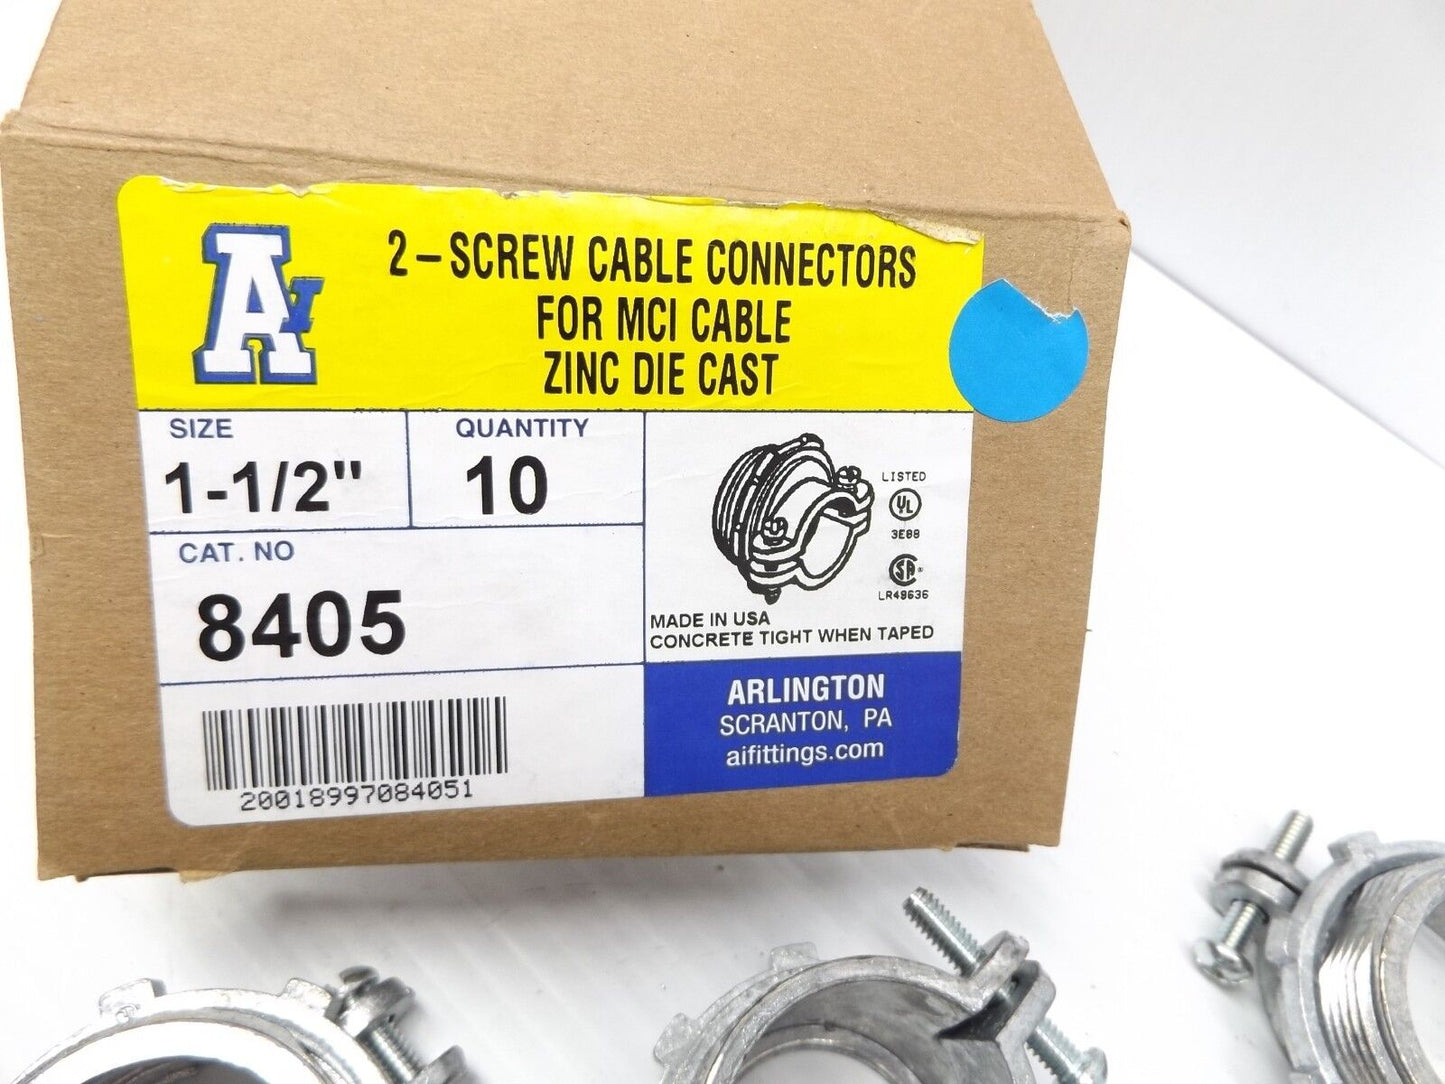 LOT OF 10 ARLINGTON 8405 CABLE CONNECTOR 1-1/2” FOR MCI, 2-SCREW ZINC DIE CAST